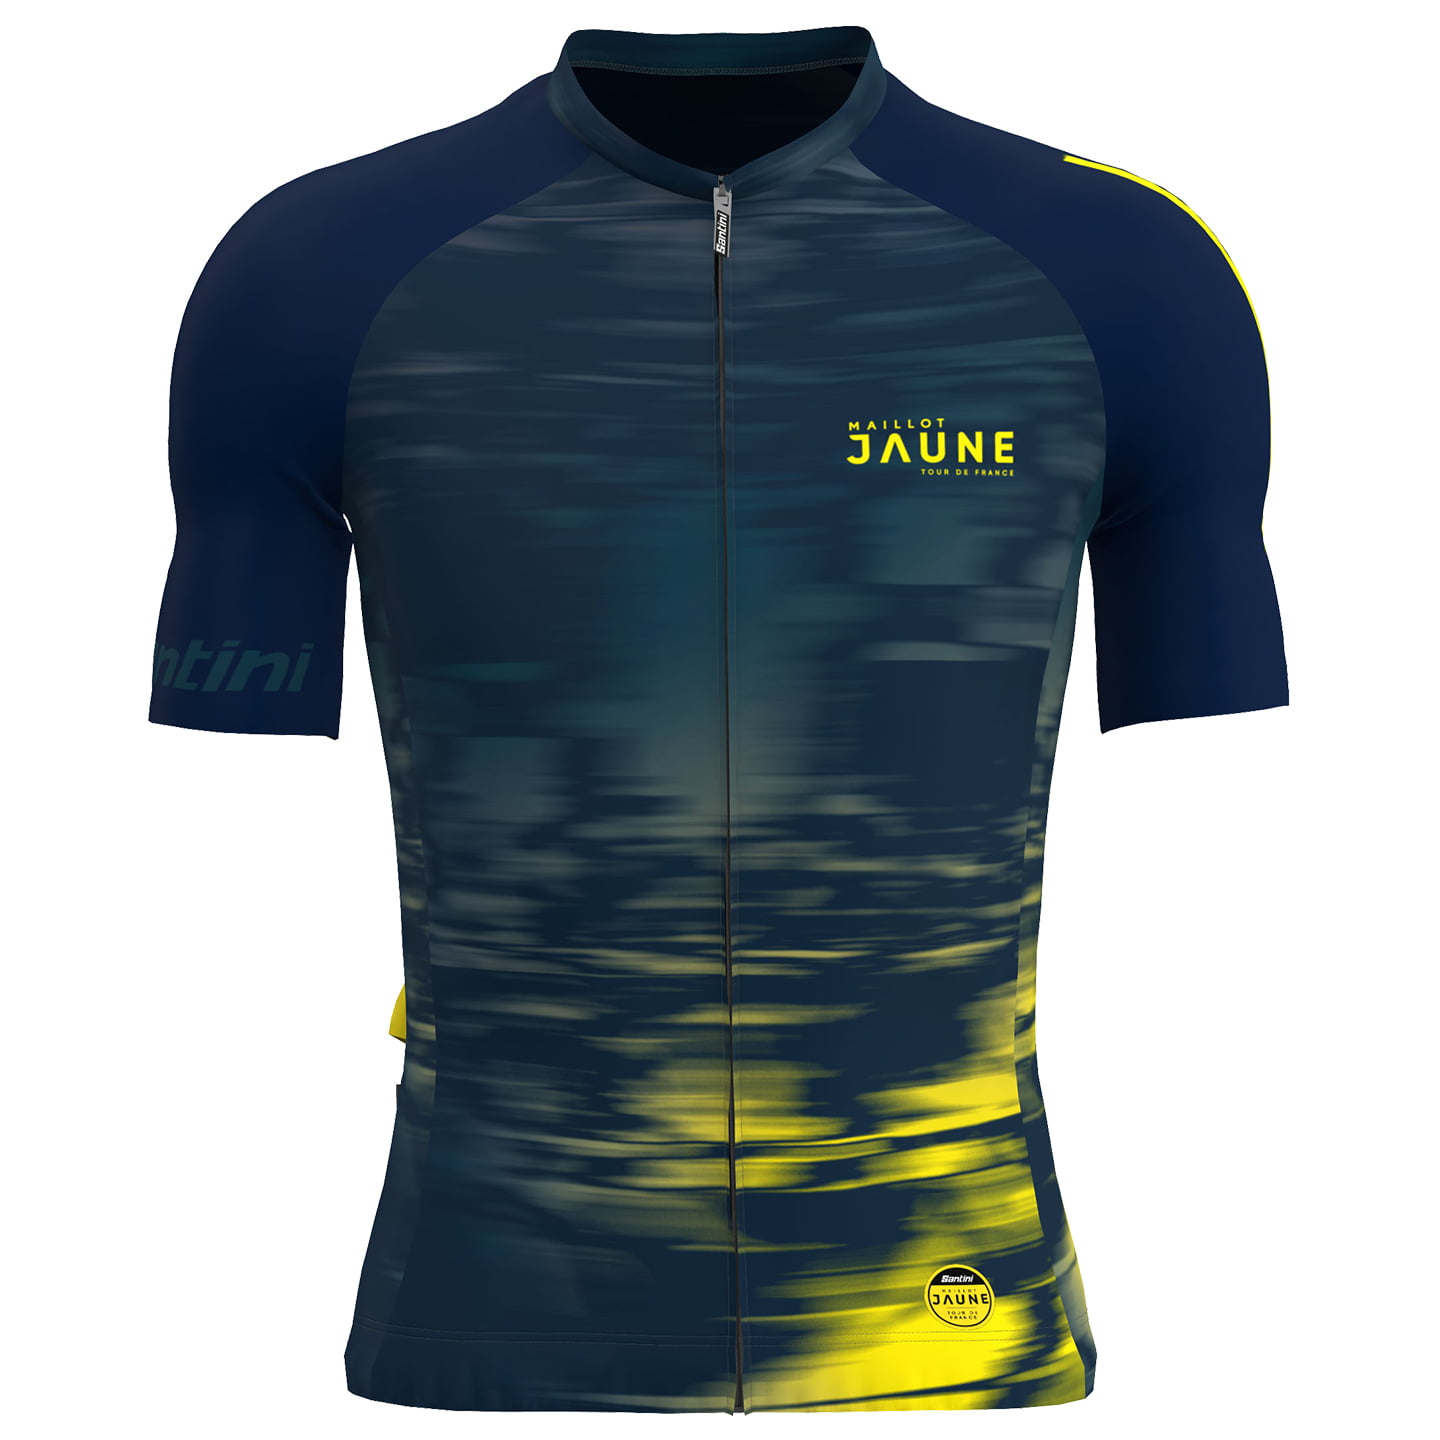 TOUR DE FRANCE Le Maillot Jaune Esprit 2023 Short Sleeve Jersey, for men, size L, Cycling shirt, Cycle clothing